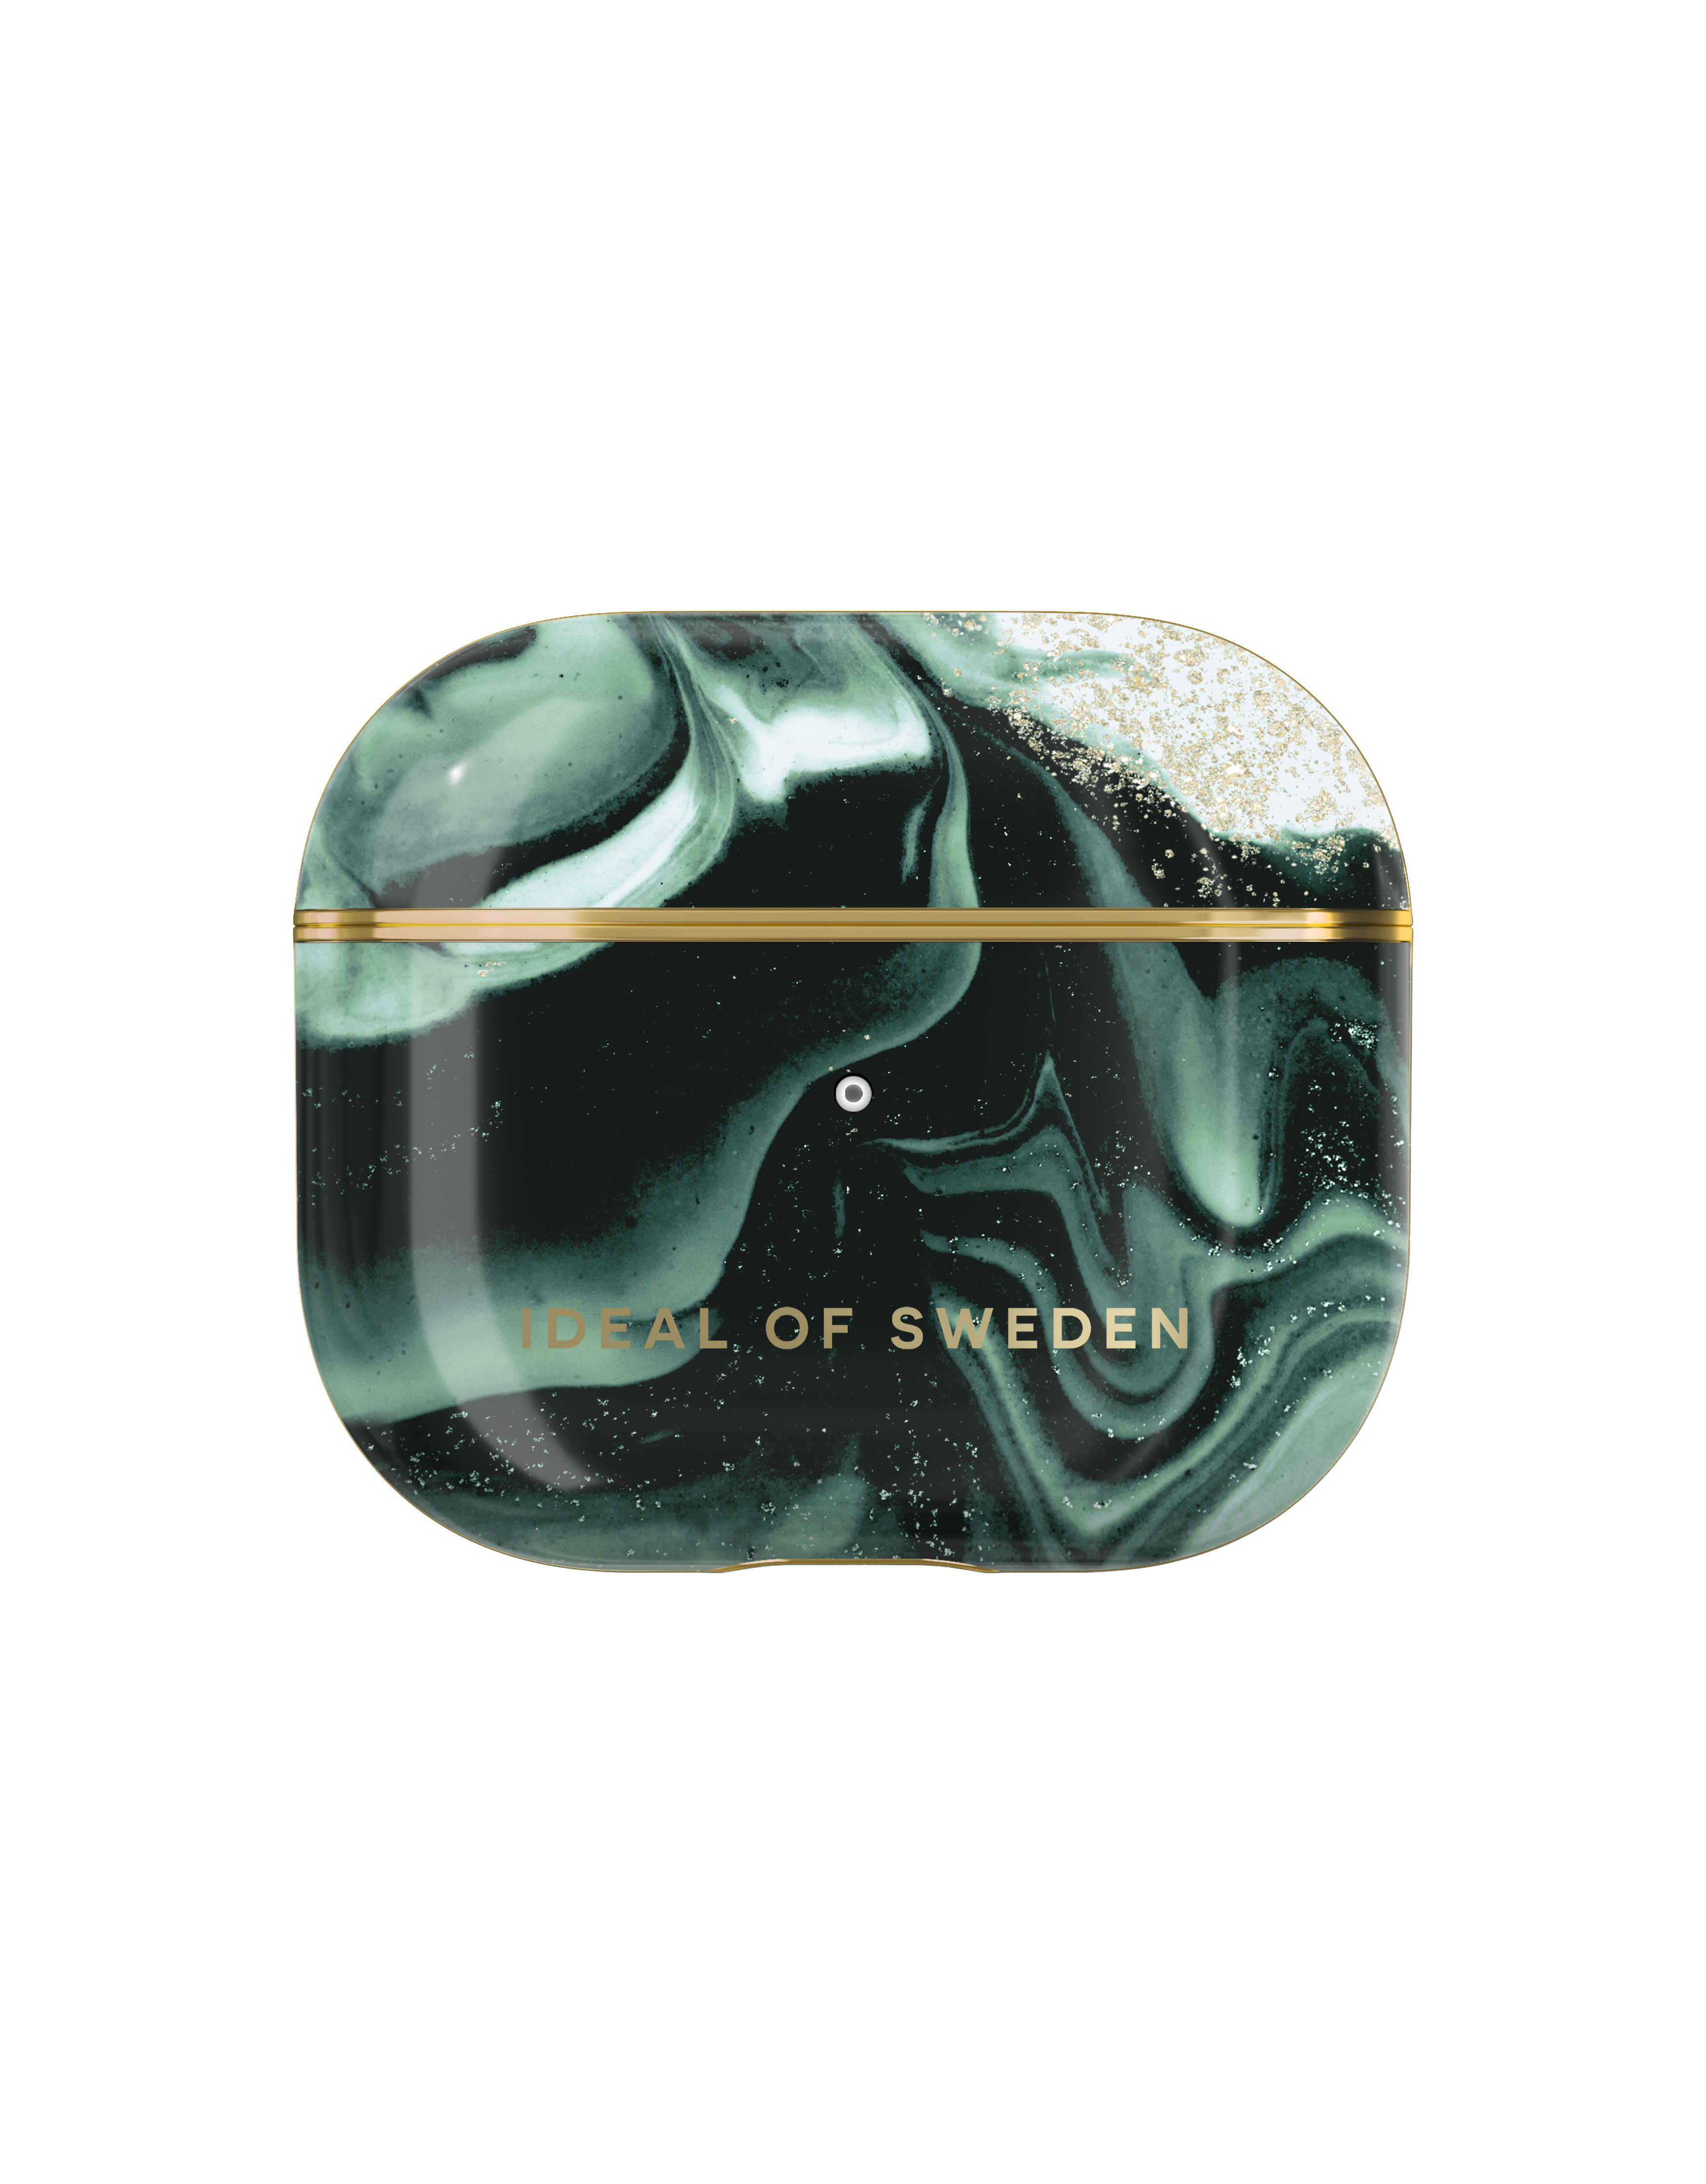 Gen Case Olive Golden 3 Marble Schutzhülle SWEDEN IDEAL OF IDFAPCAW21-G4-320 Airpods